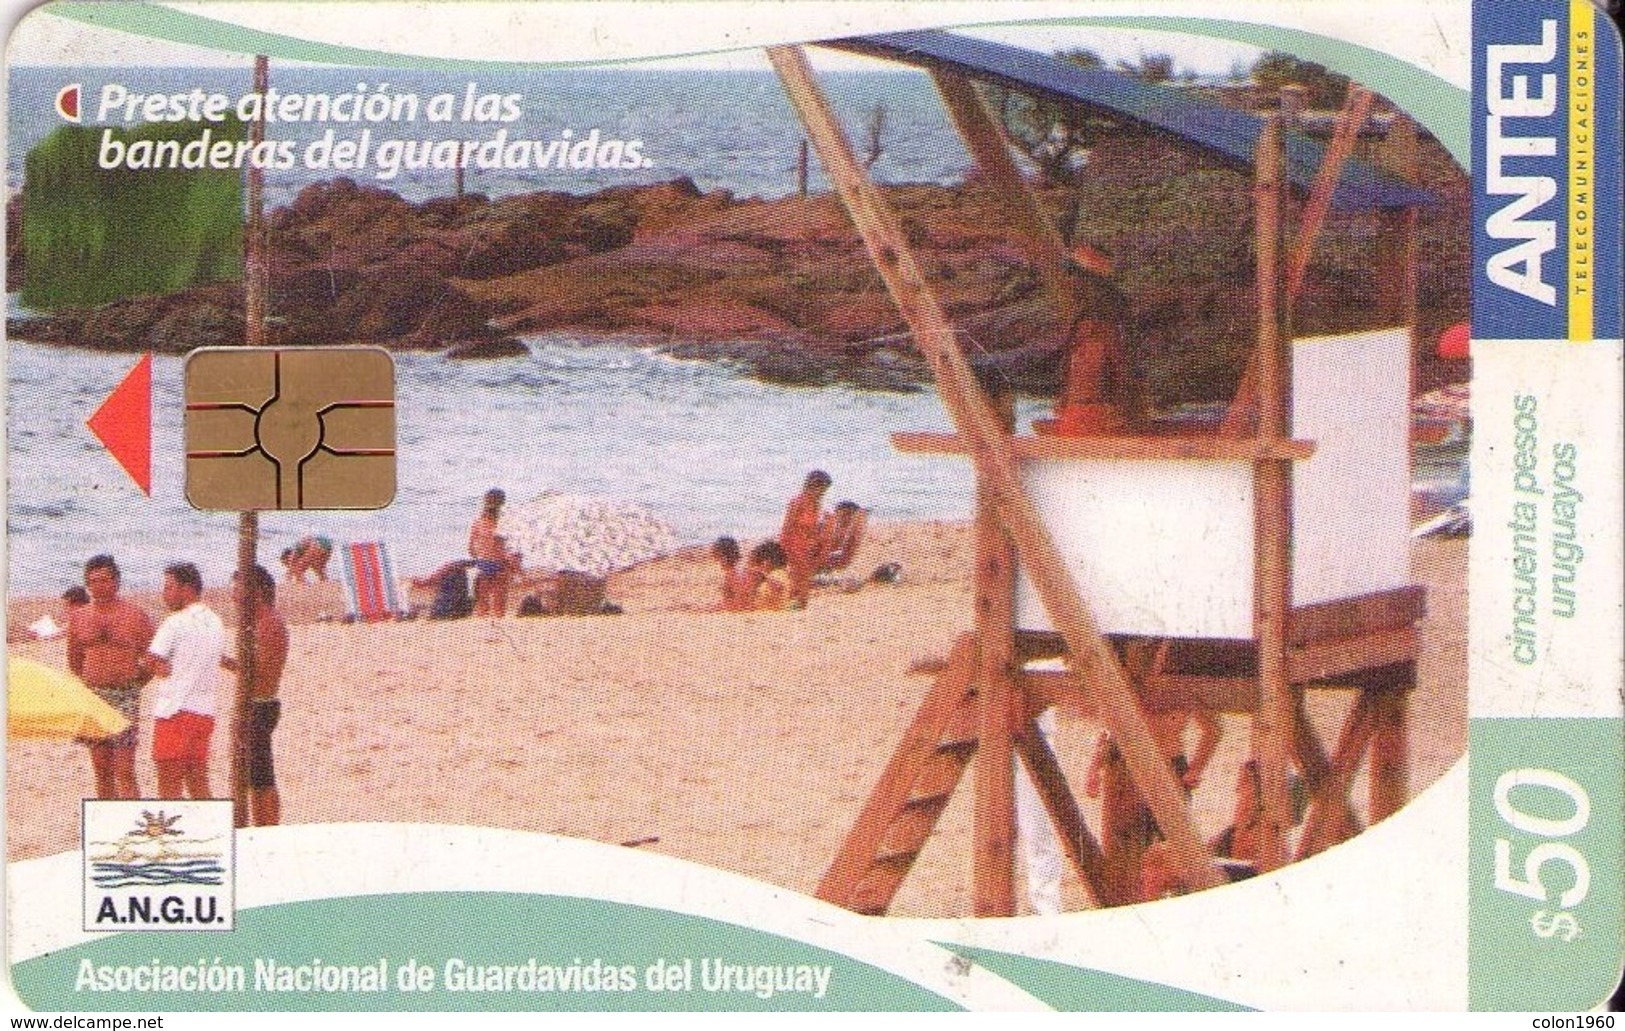 URUGUAY. TC455a. A.N.G.U. BANDERAS. 12-2006. (148) - Uruguay